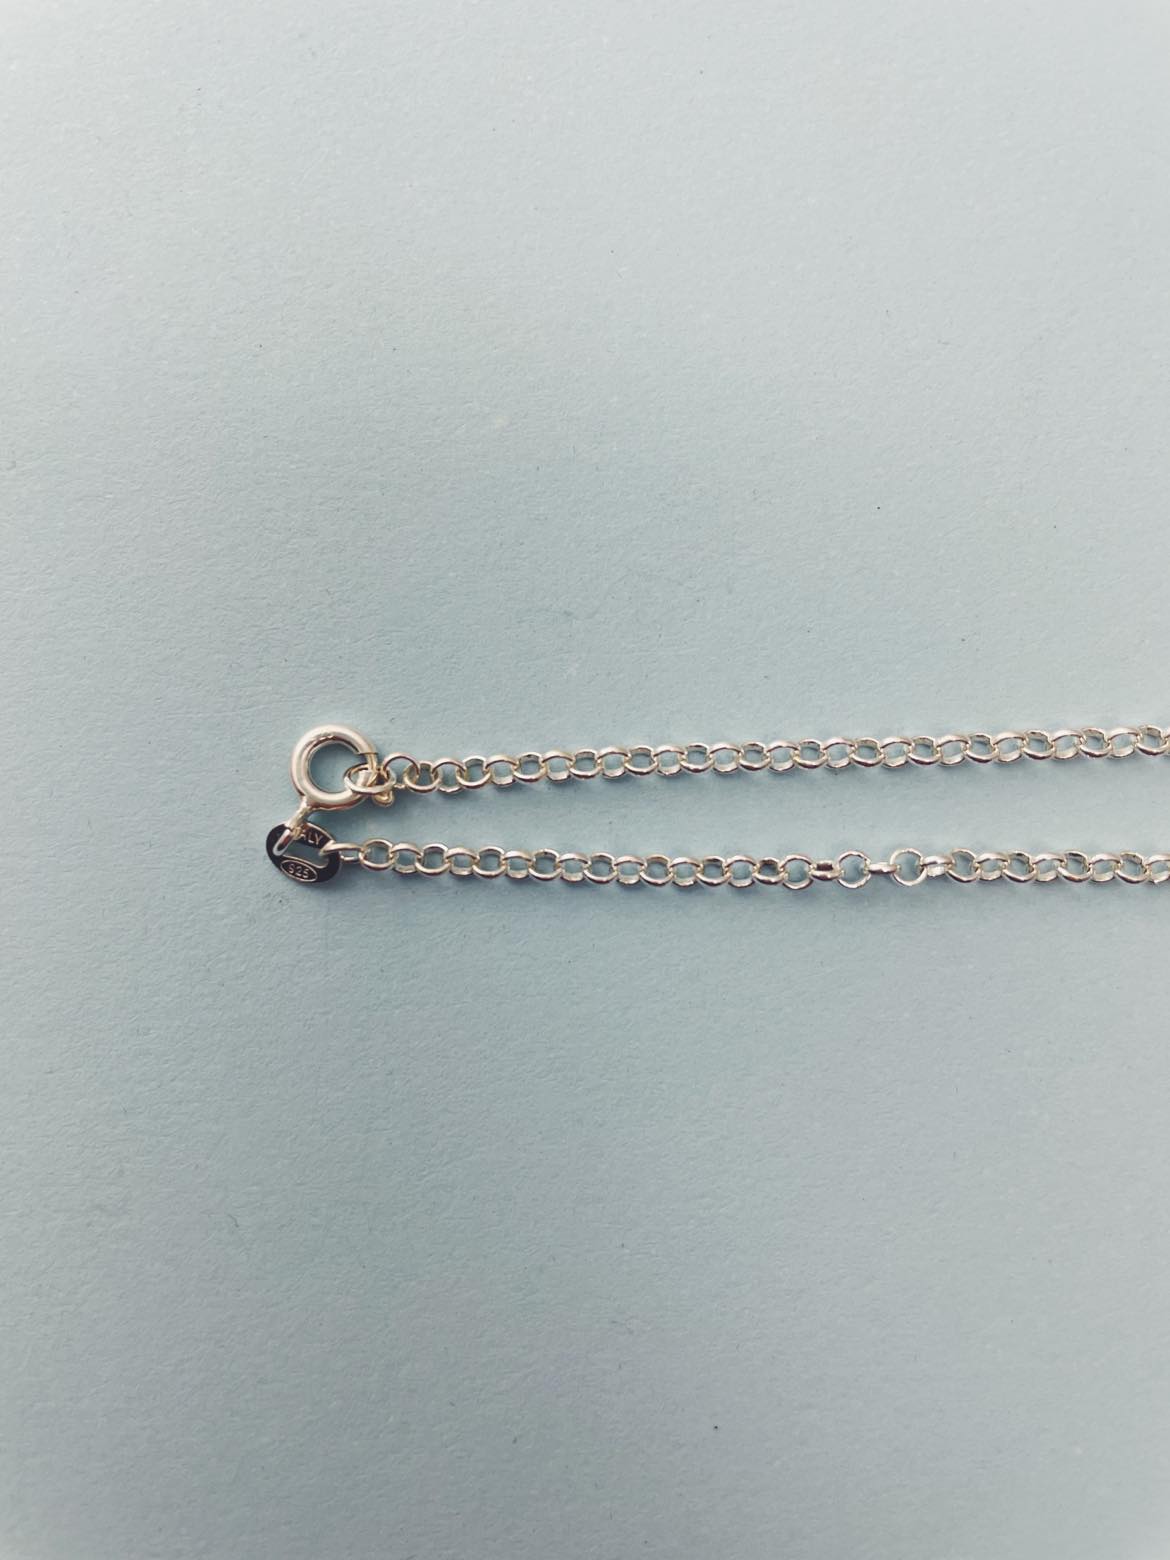 Belcher chain 70cm s/s | Best Jewellery supplies